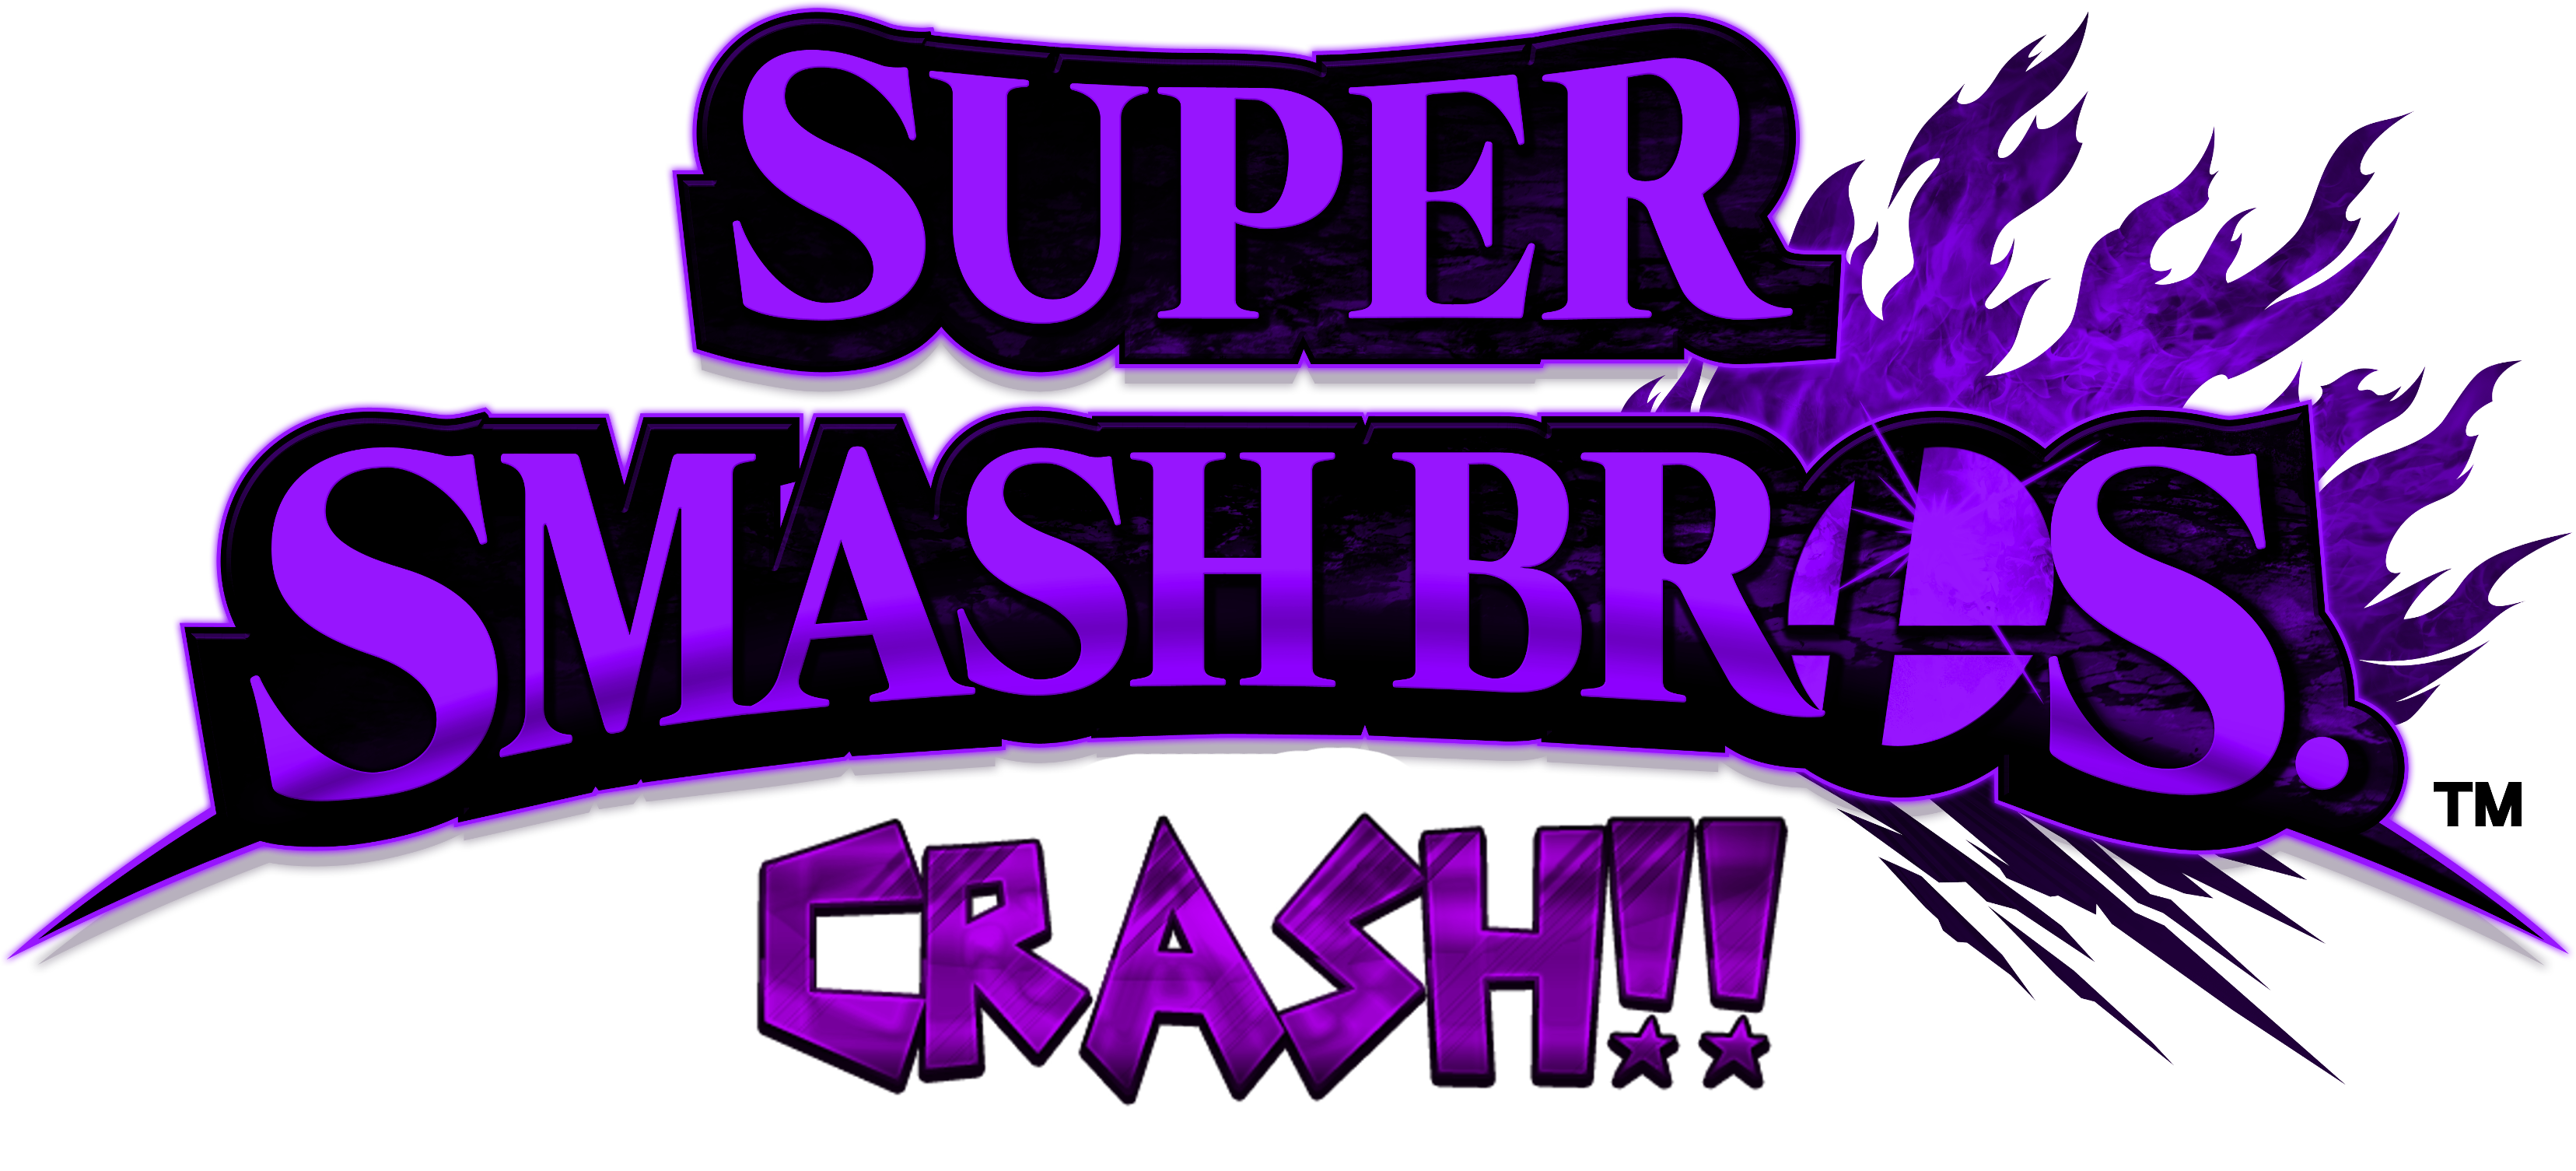 super smash bros infinite crashes when selected brawl